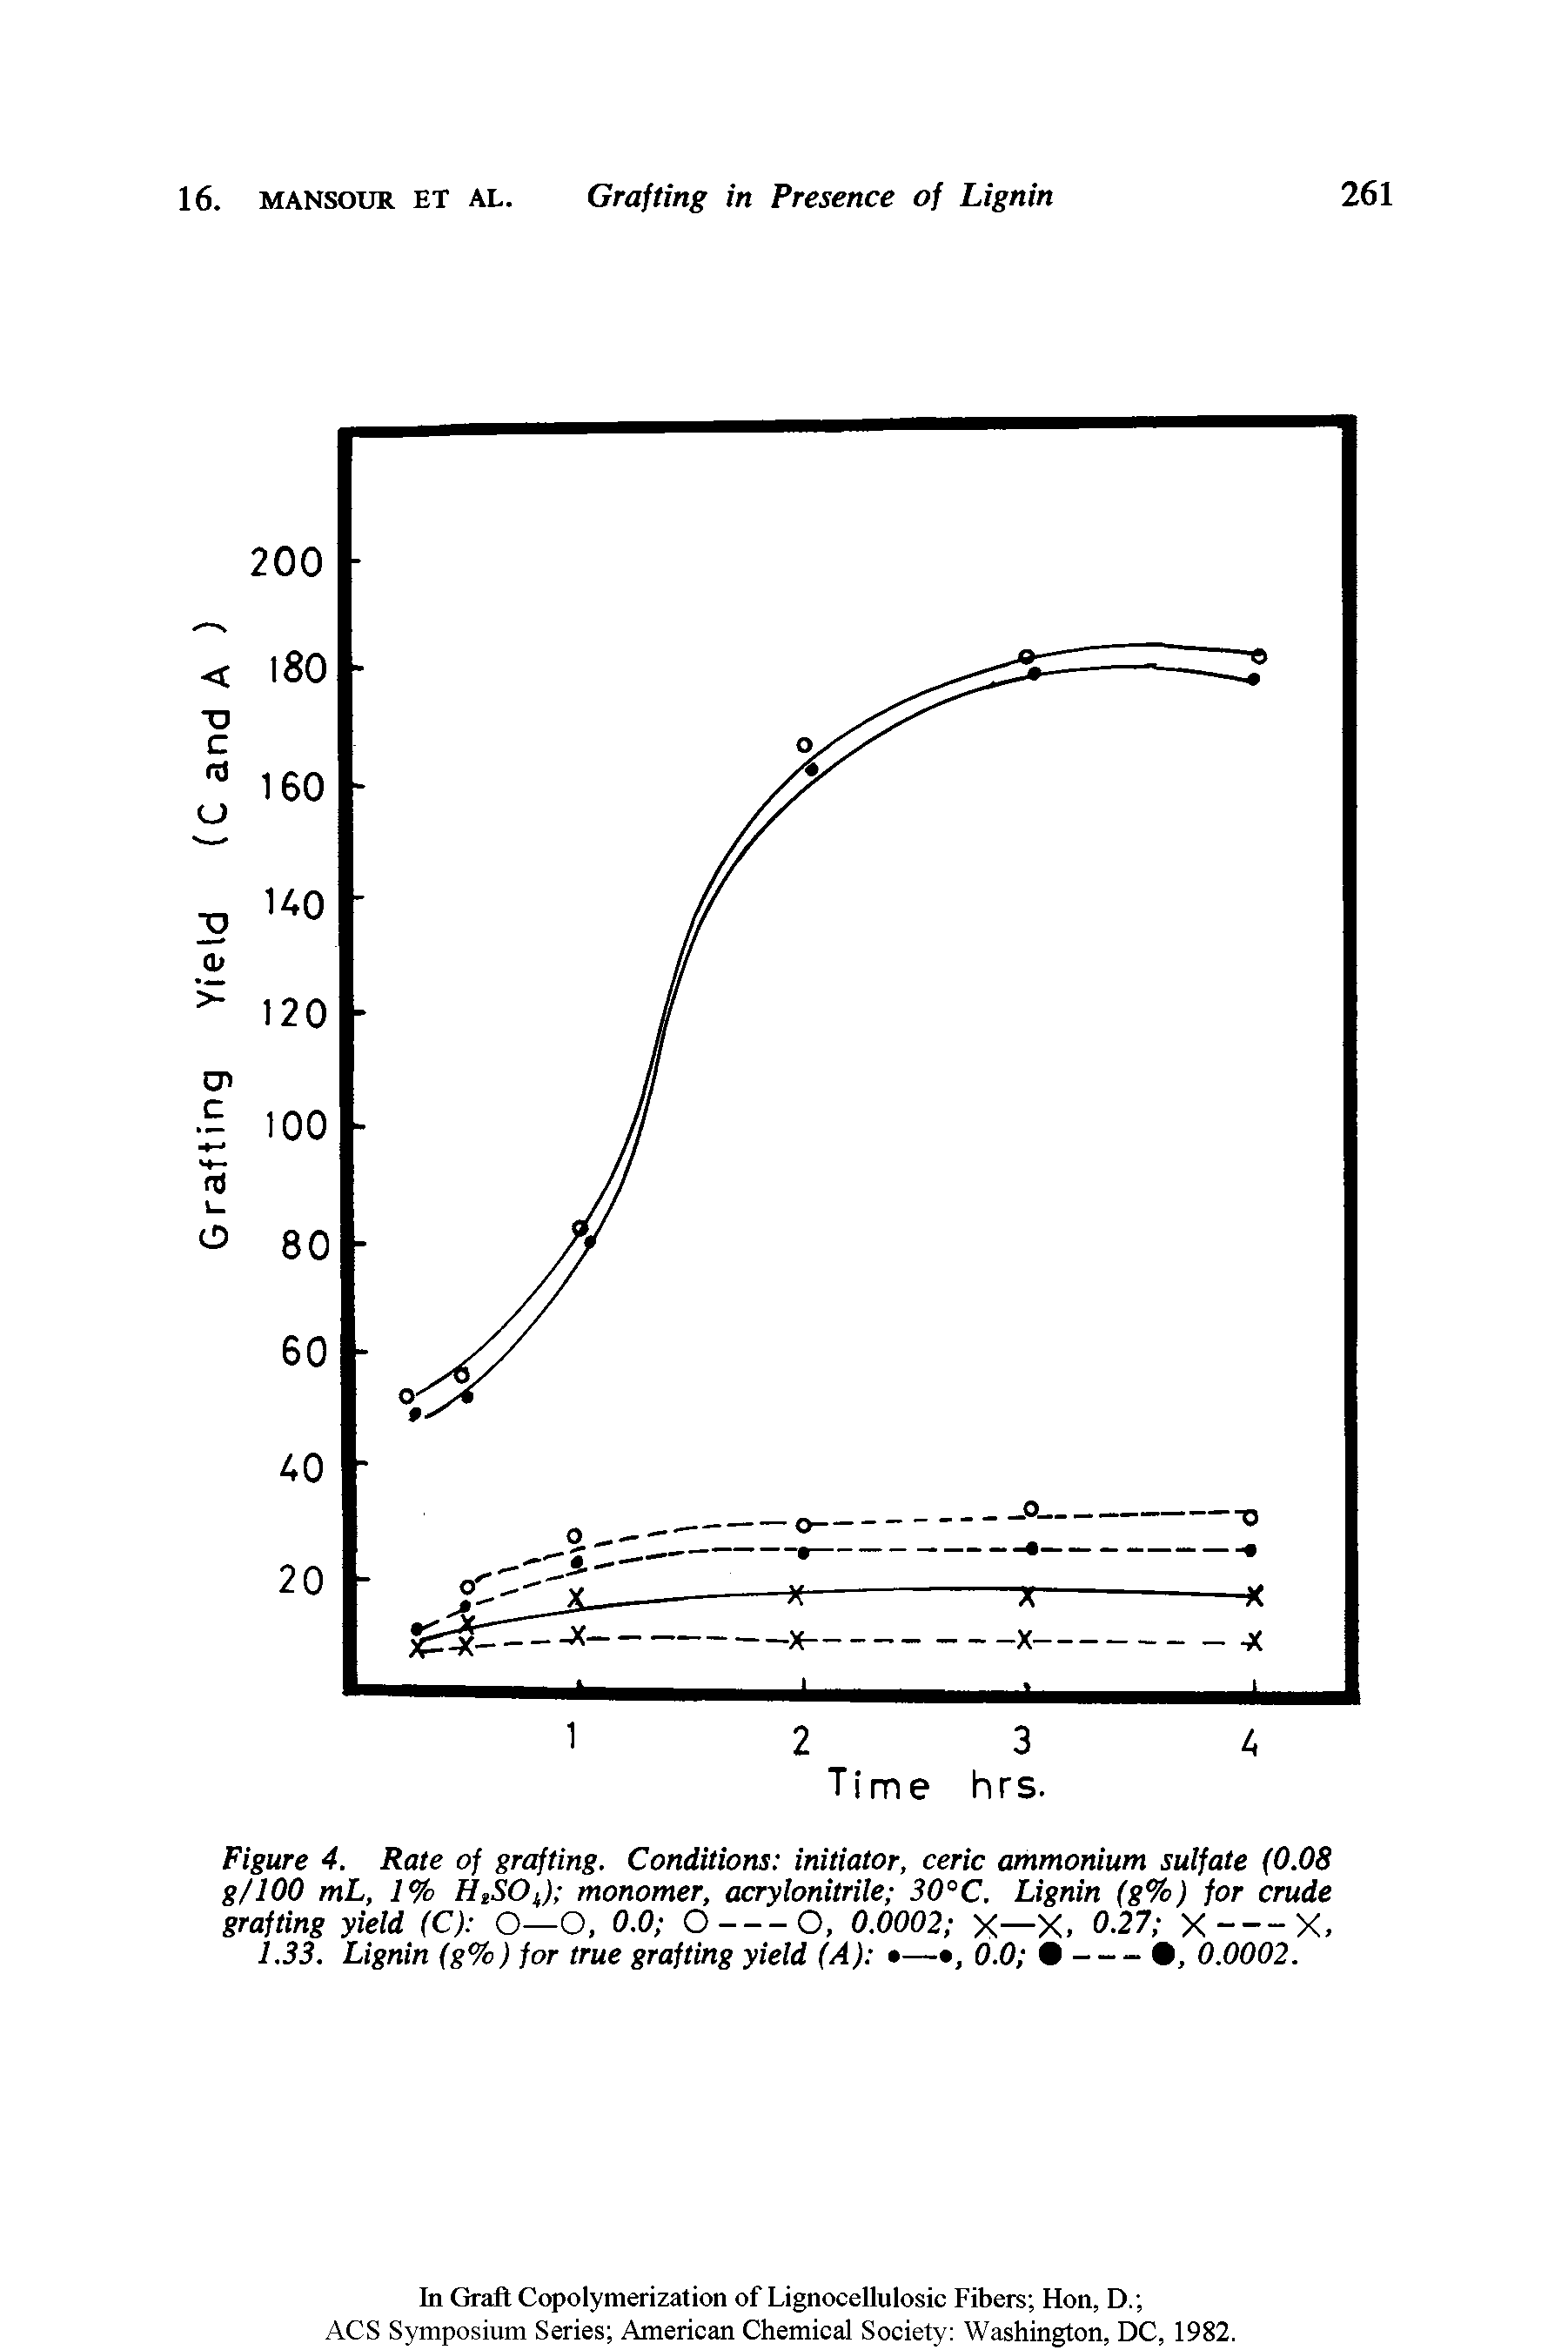 Figure 4. Rate of grafting. Conditions initiator, ceric ammonium sulfate (0.08 g/100 mL, 1% HzSOi) monomer, acrylonitrile 30°C. Lignin (g%) for crude...